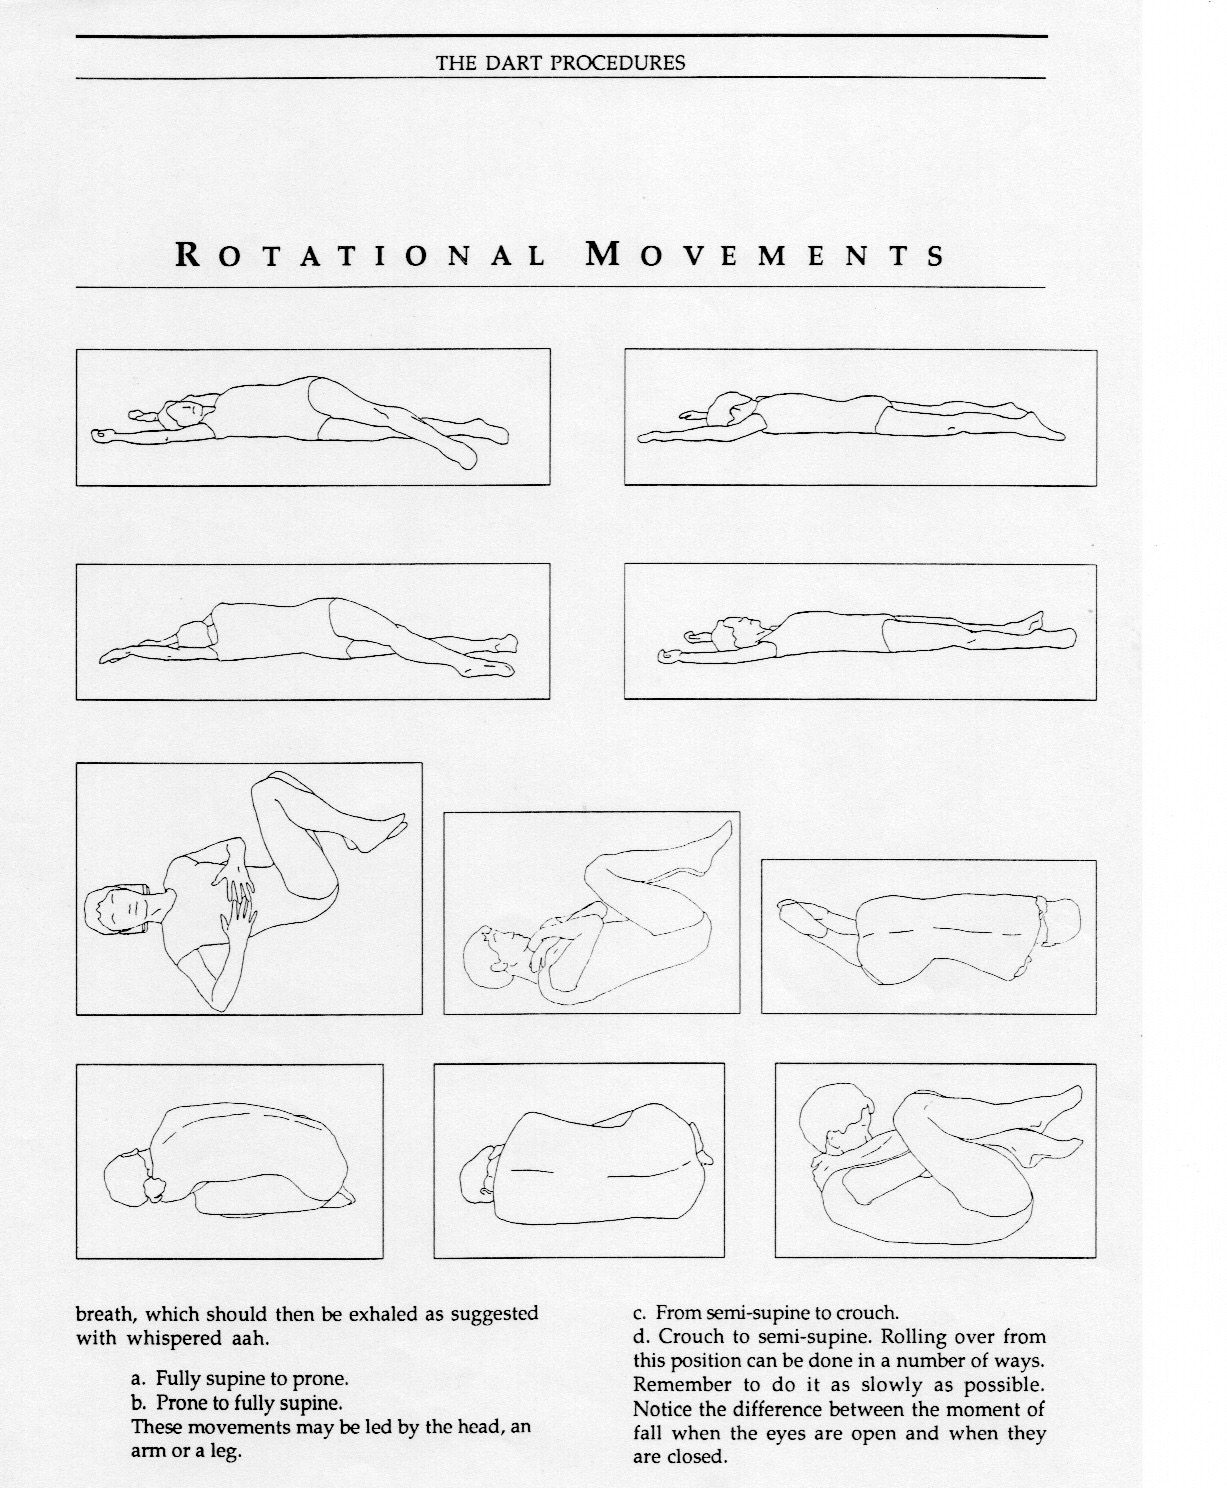 Pictures of Dart Procedures early 1980s